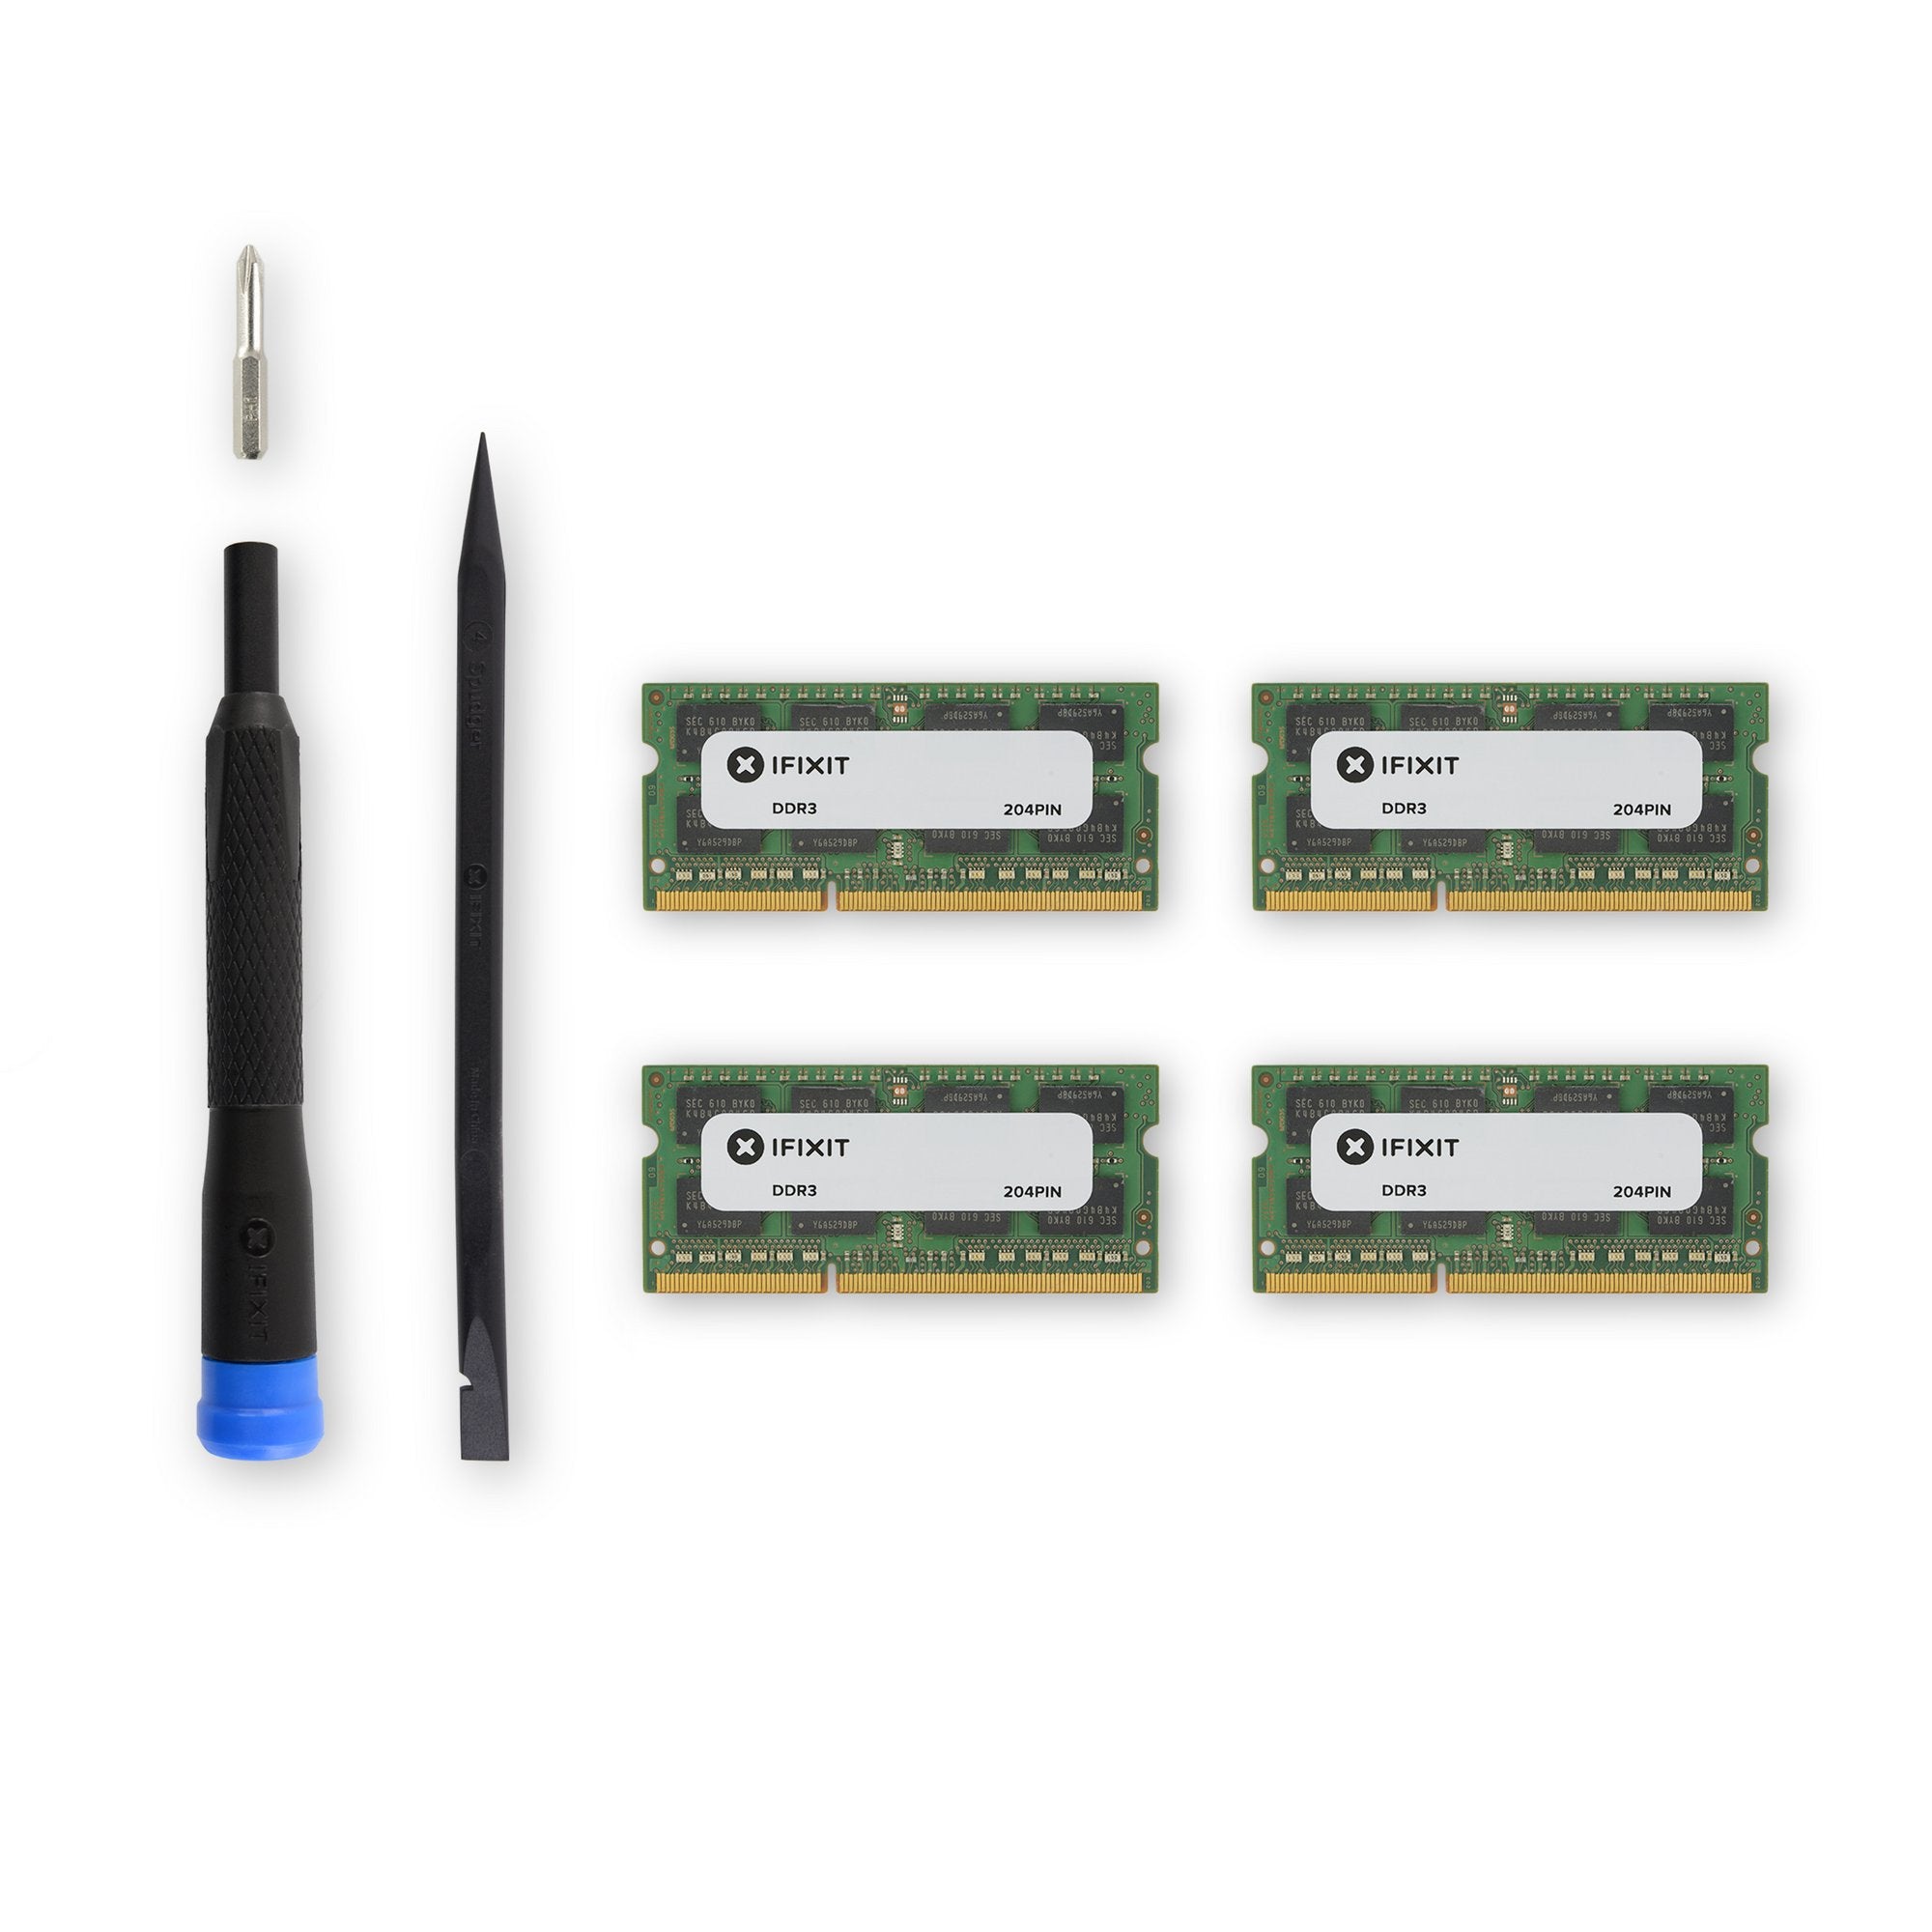 voksenalderen mover MP iMac Intel 27" (Core i5 or i7) EMC 2390 (Mid 2010) Memory Maxxer RAM  Upgrade Kit